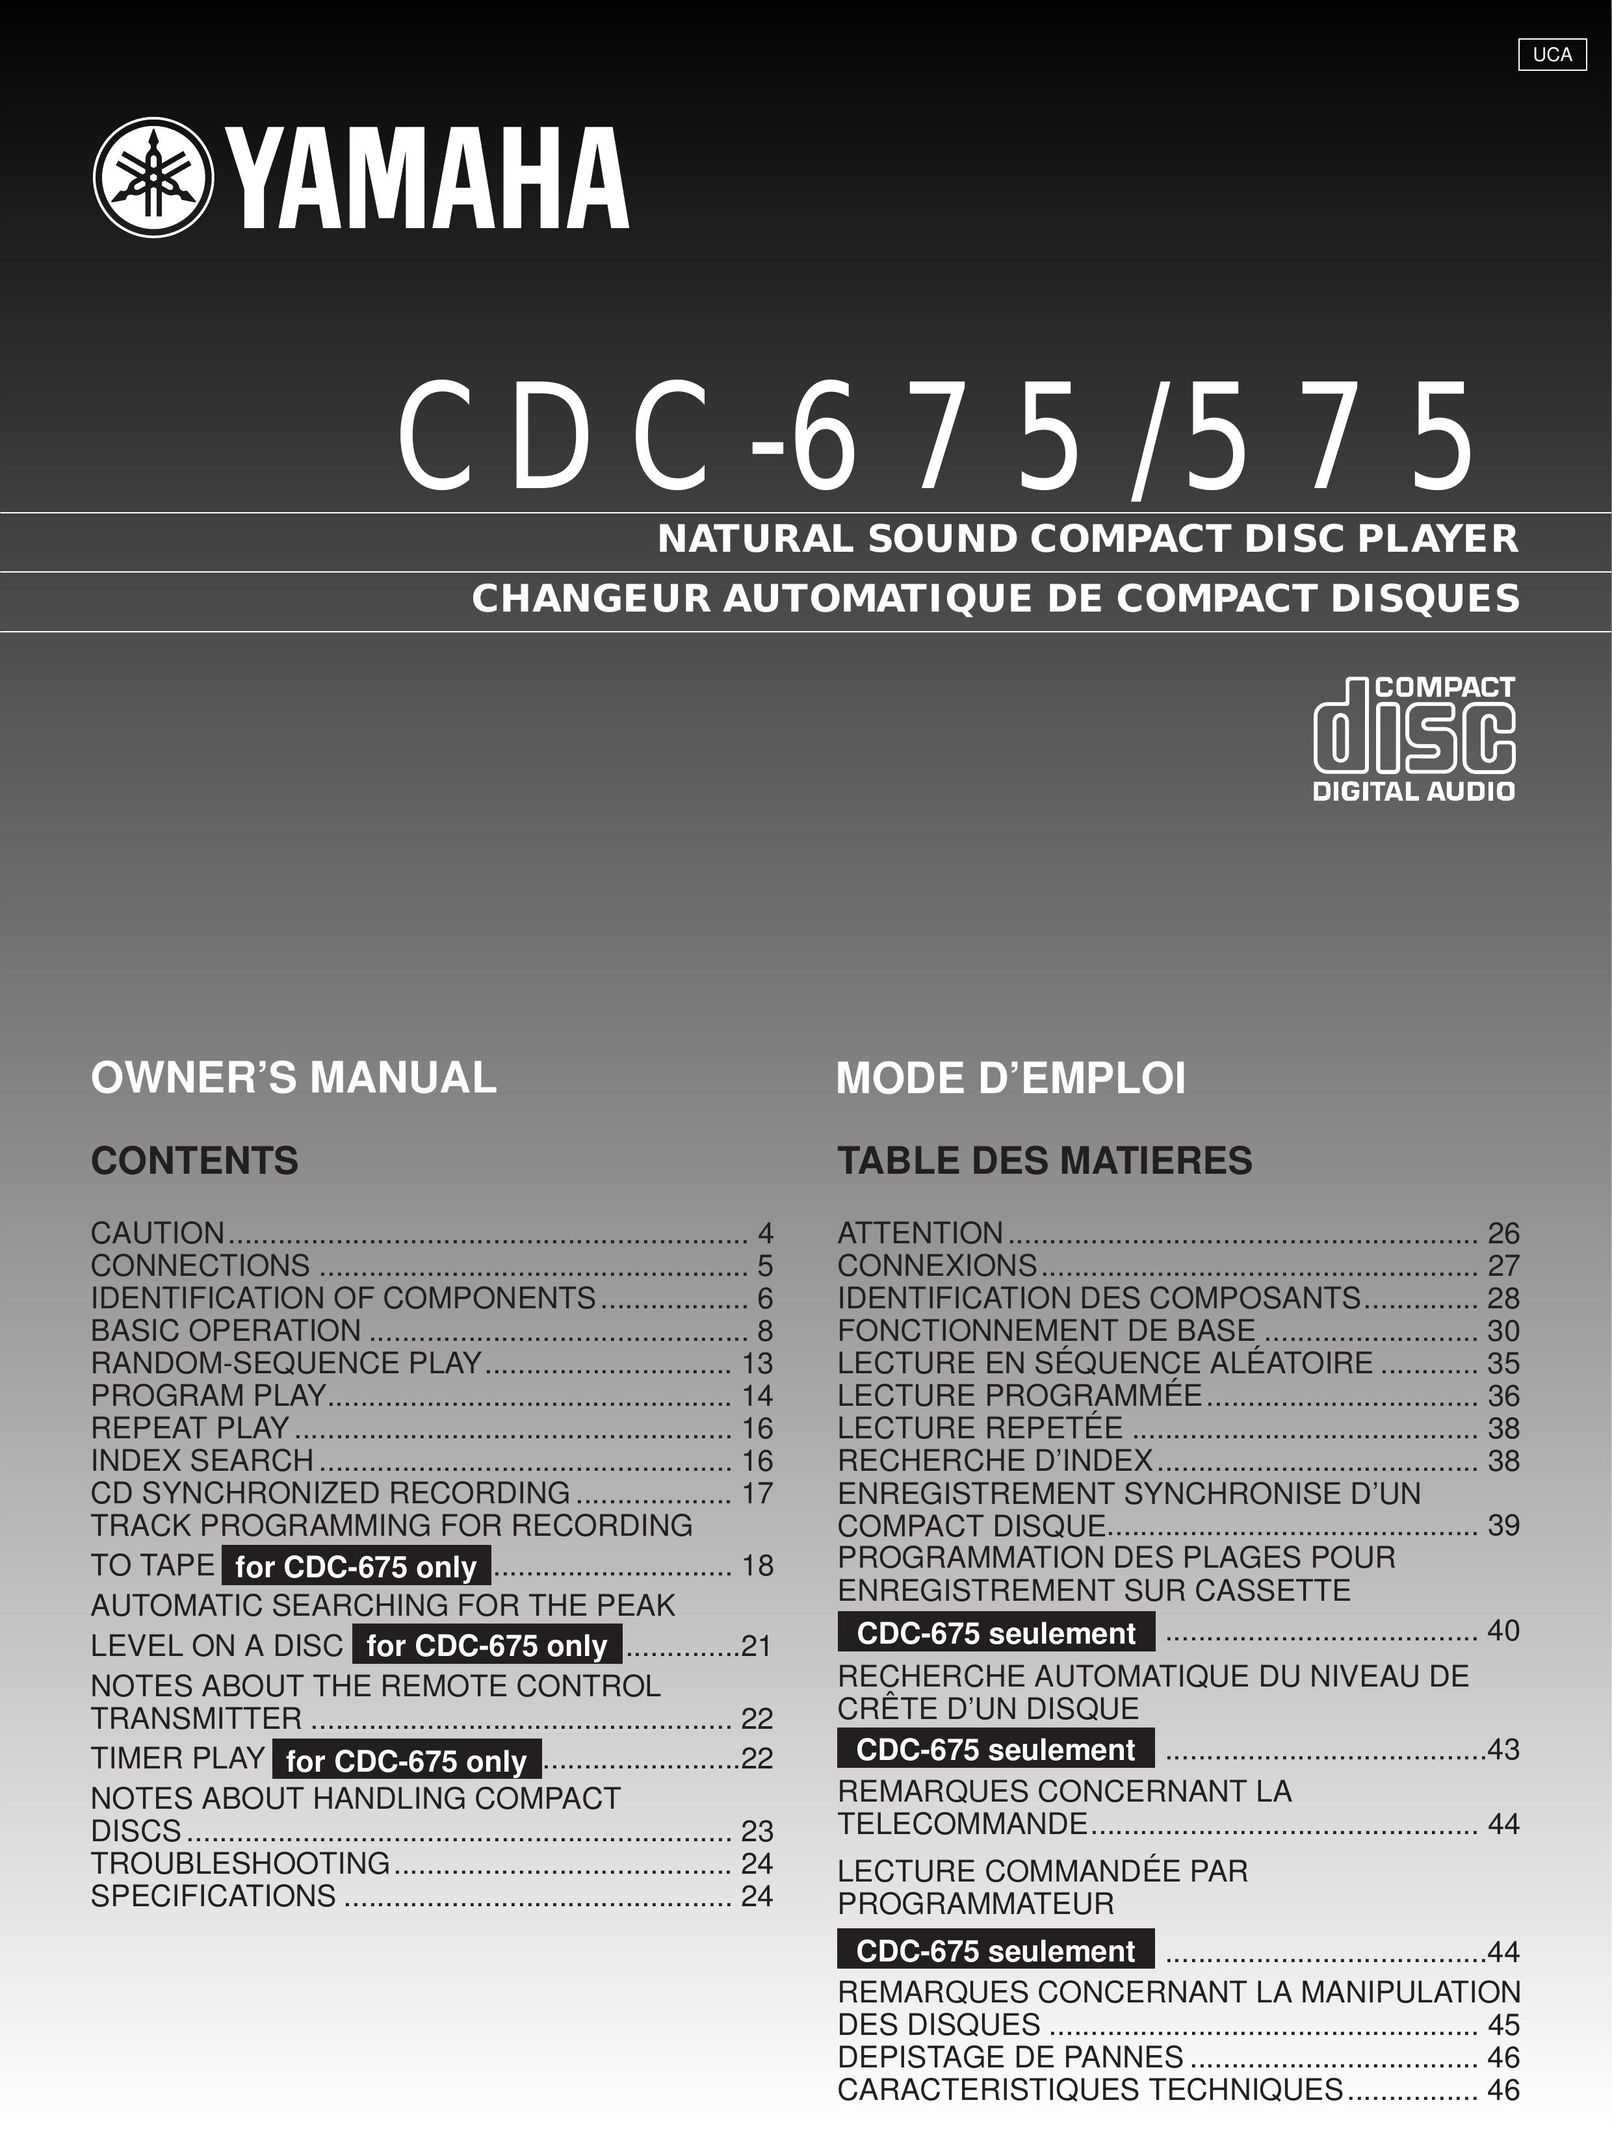 Yamaha CDC-675 Stereo System User Manual